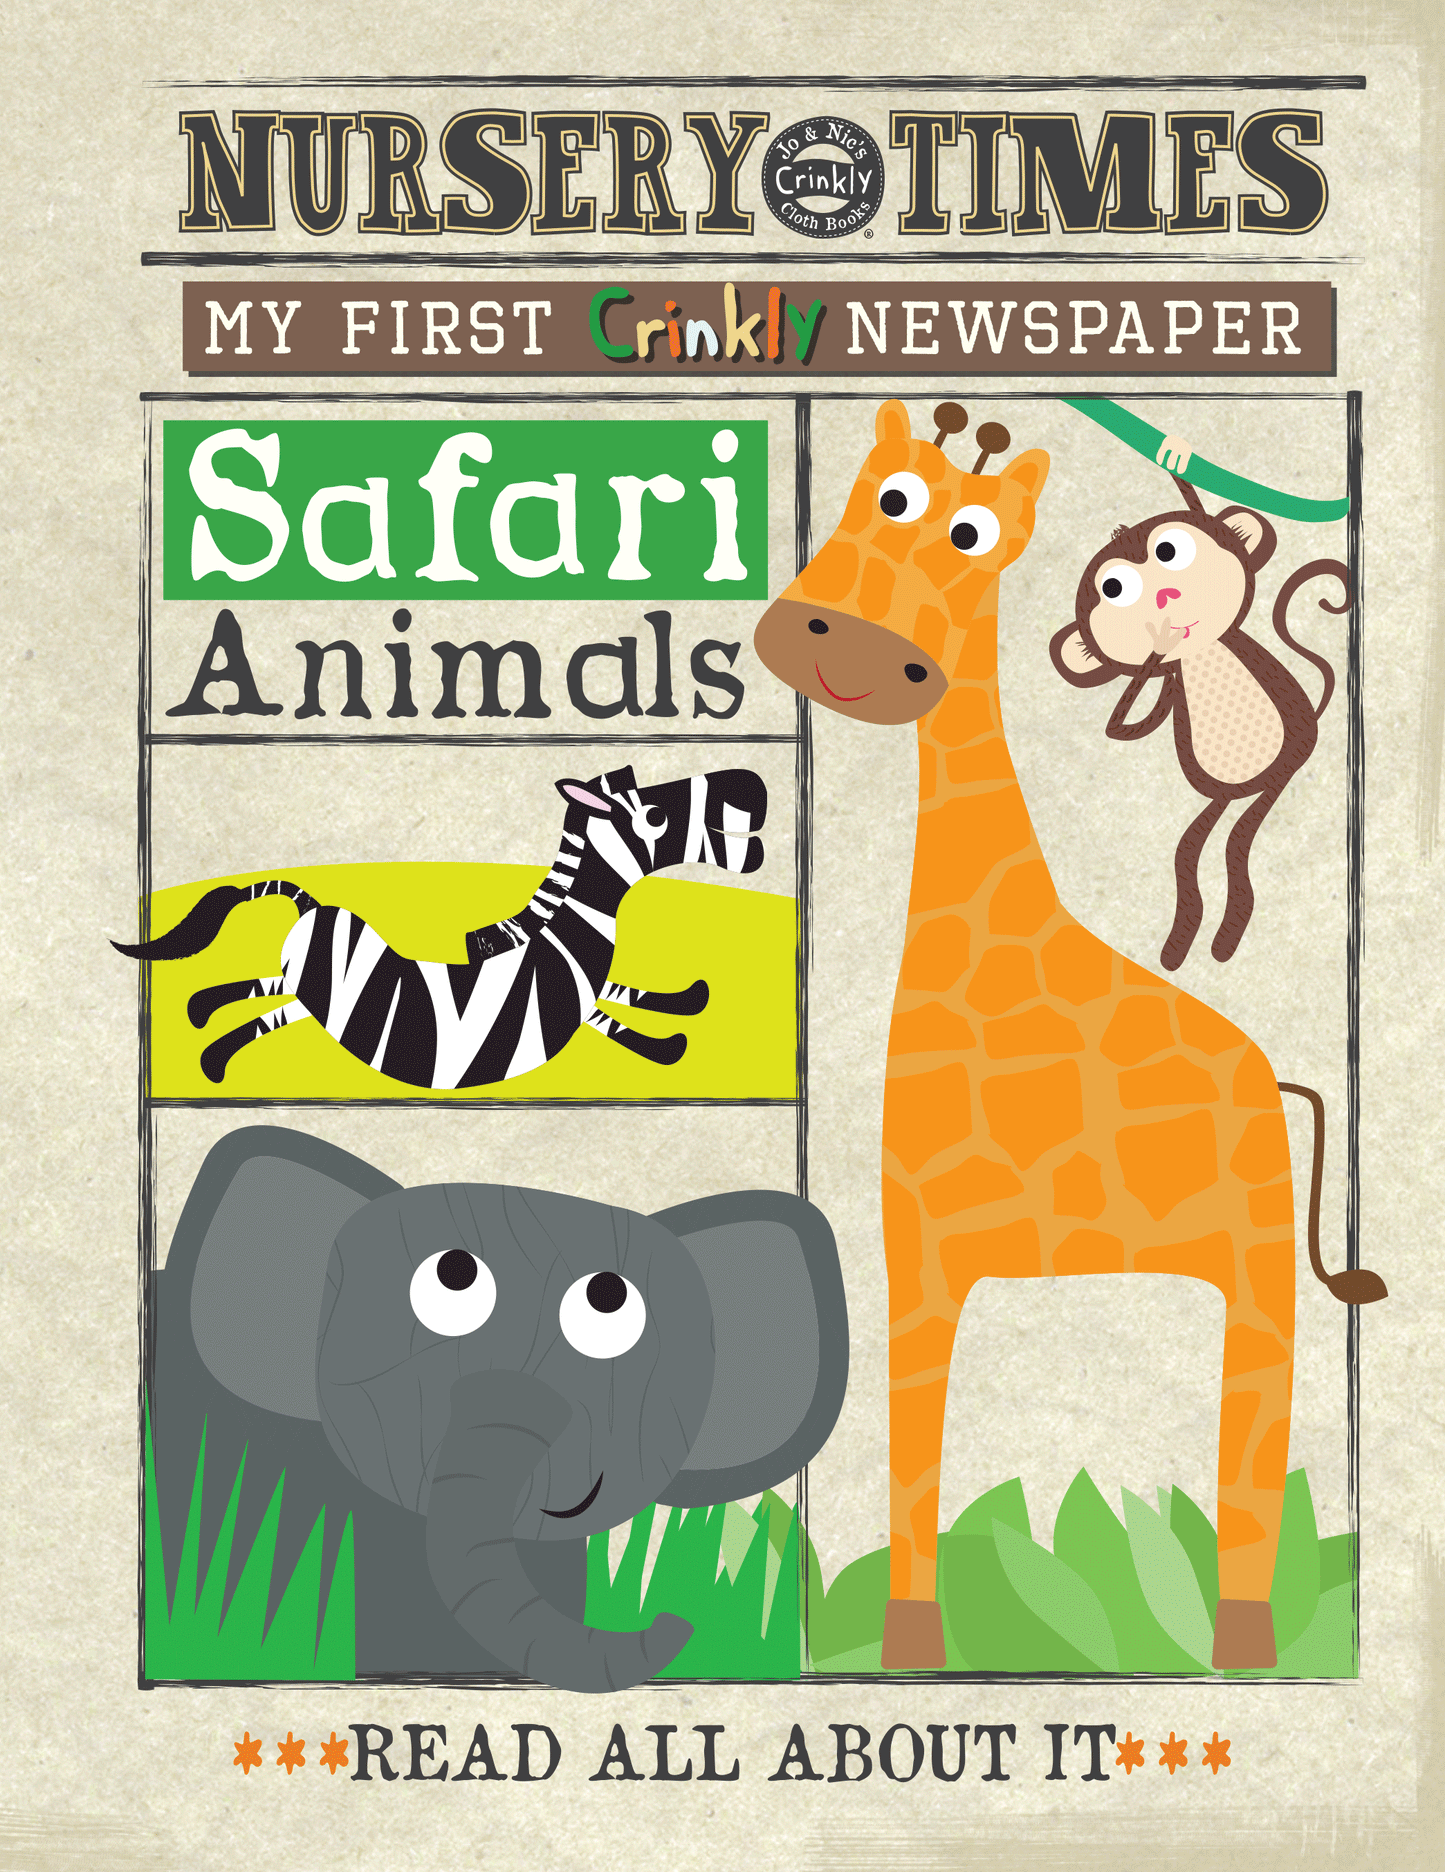 Crinkly Times - Animal Safari Cloth Book